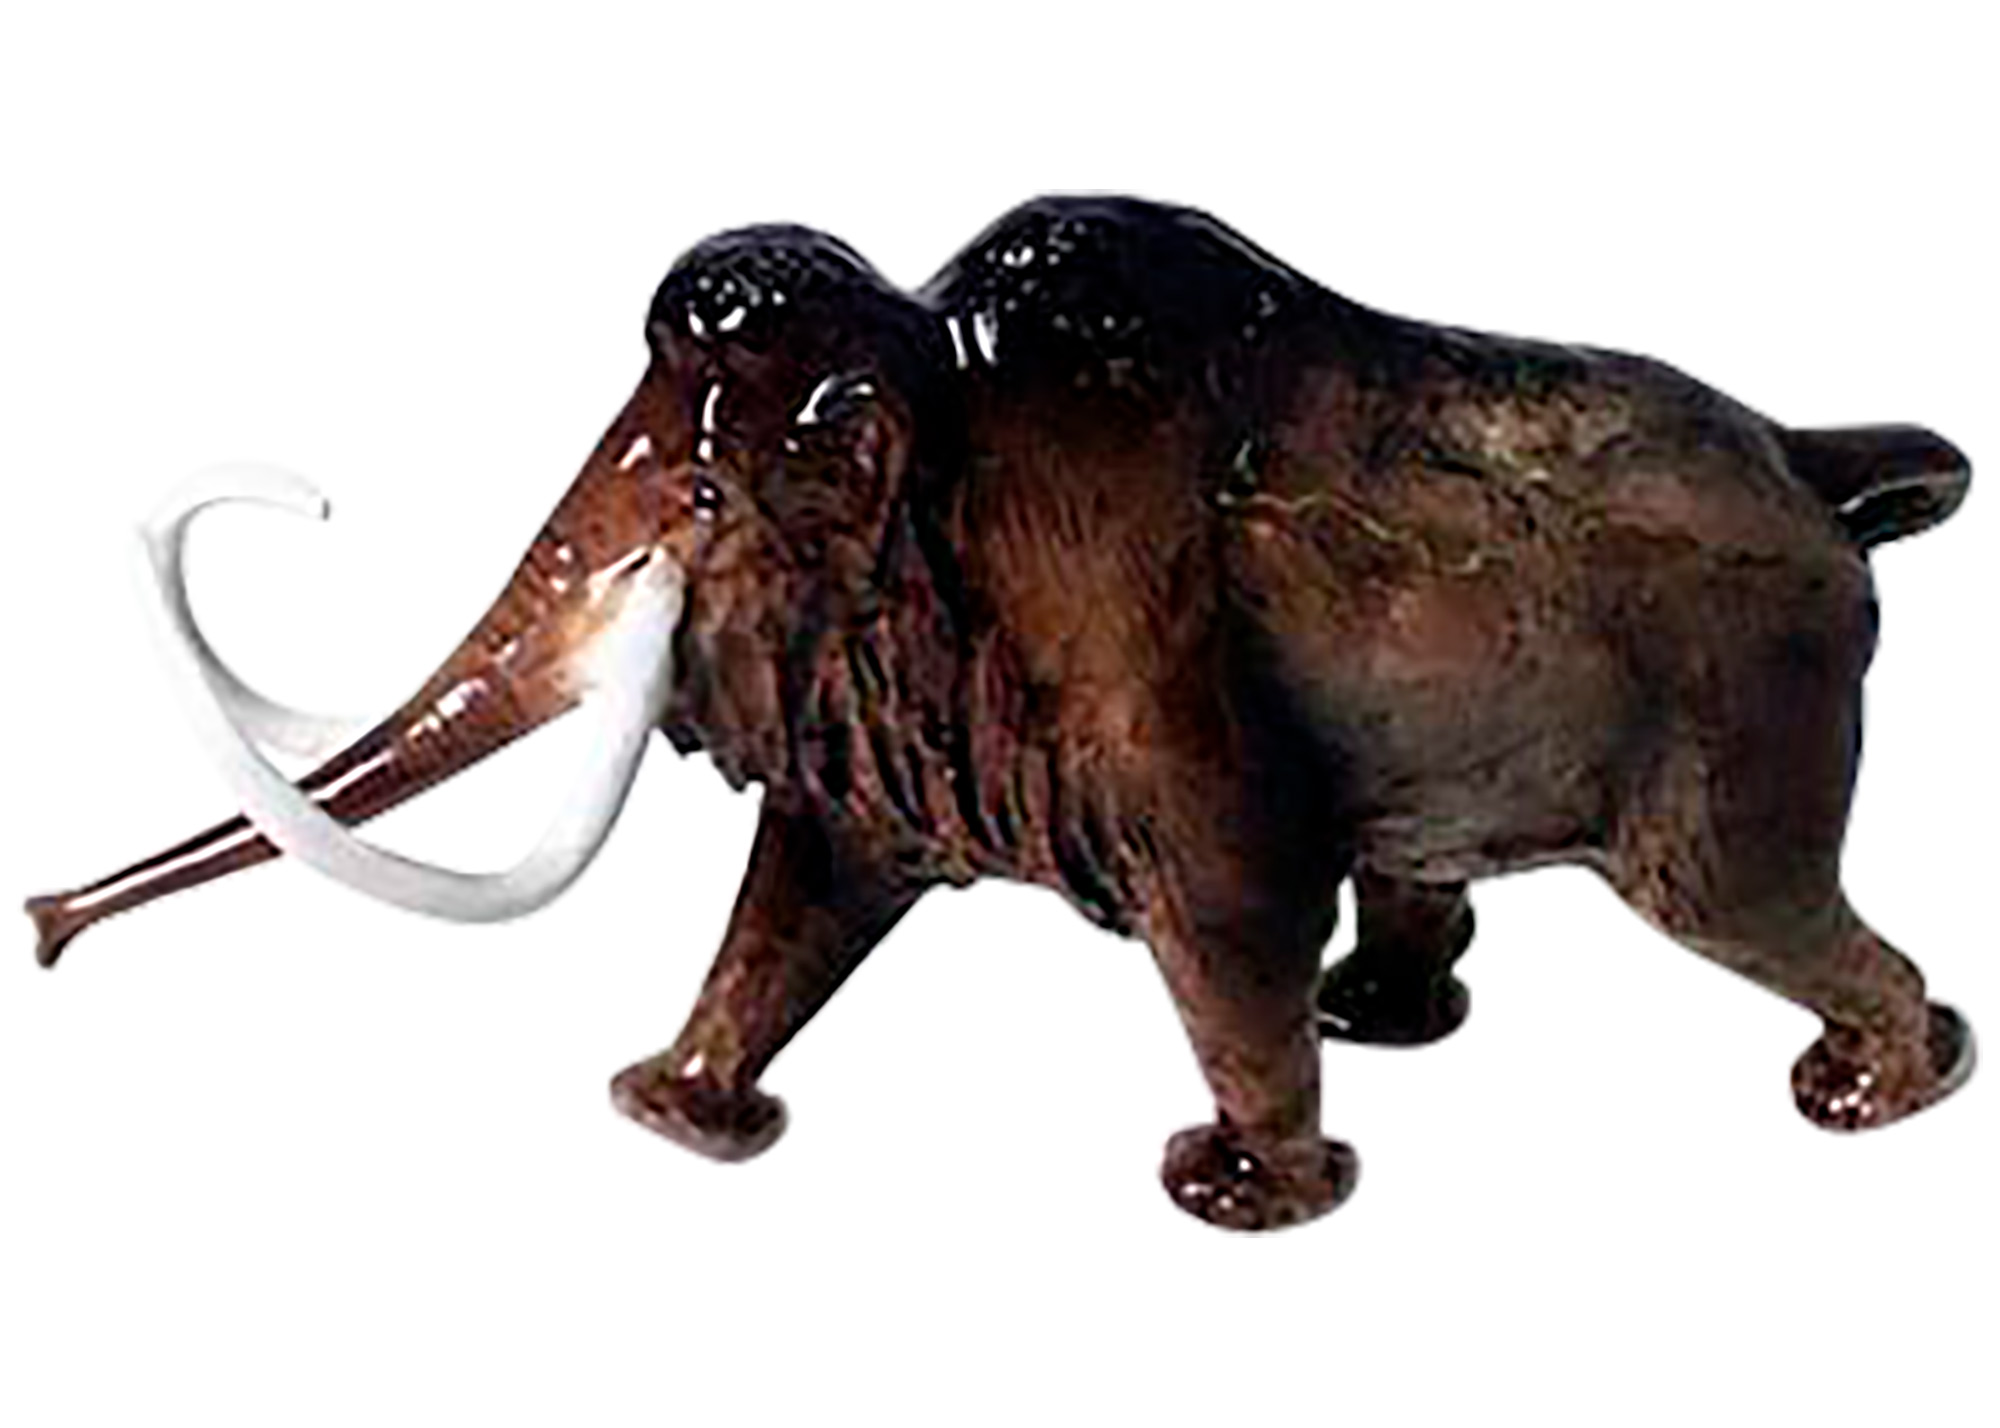 Buy Wooly Mammoth Figurine at GoldenCockerel.com